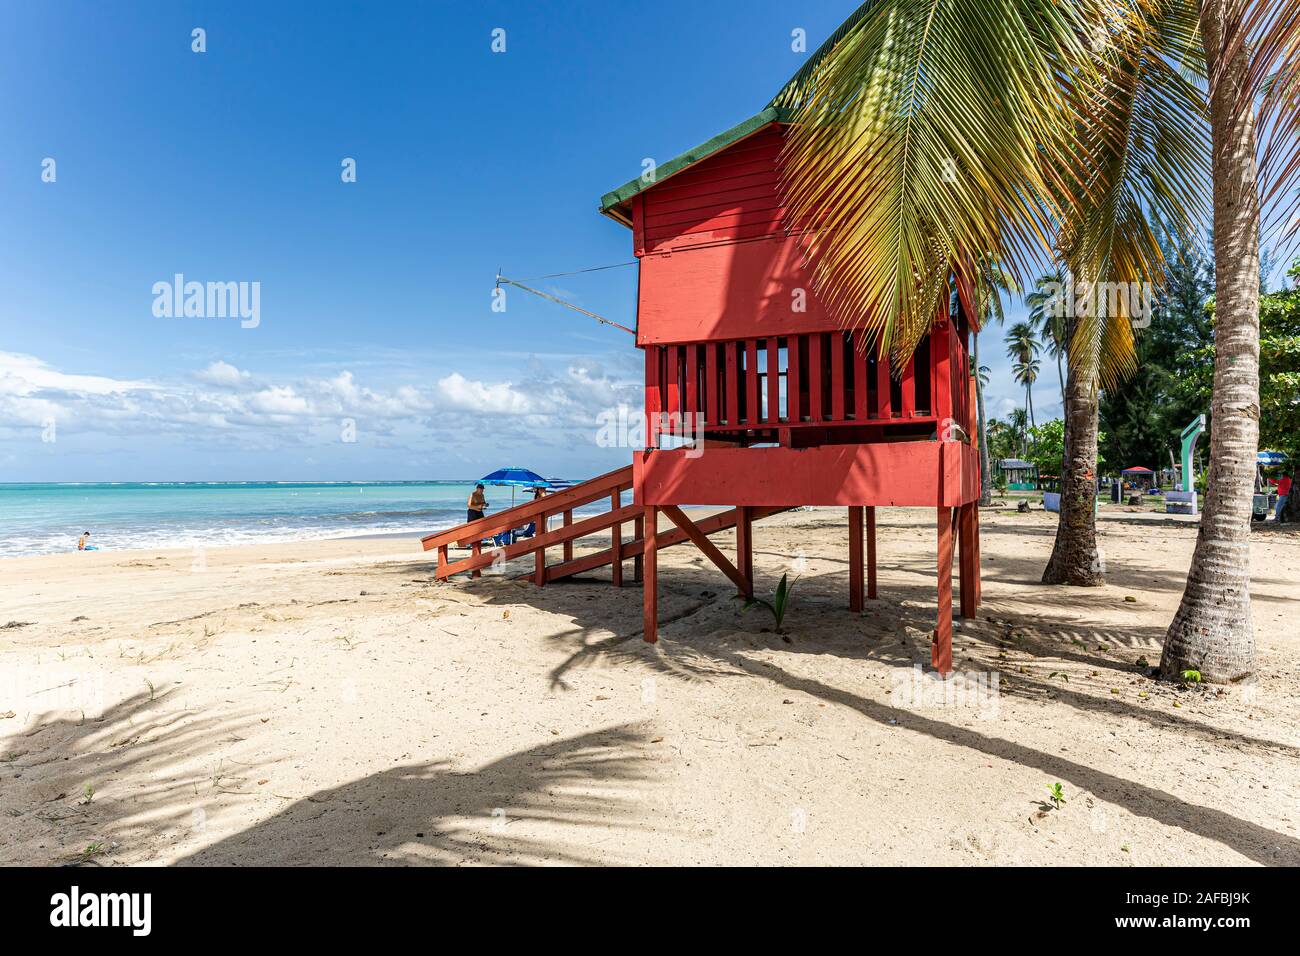 Lifeguard house and beach, Luquillo Beach, Luquillo, Puerto Rico Stock Photo